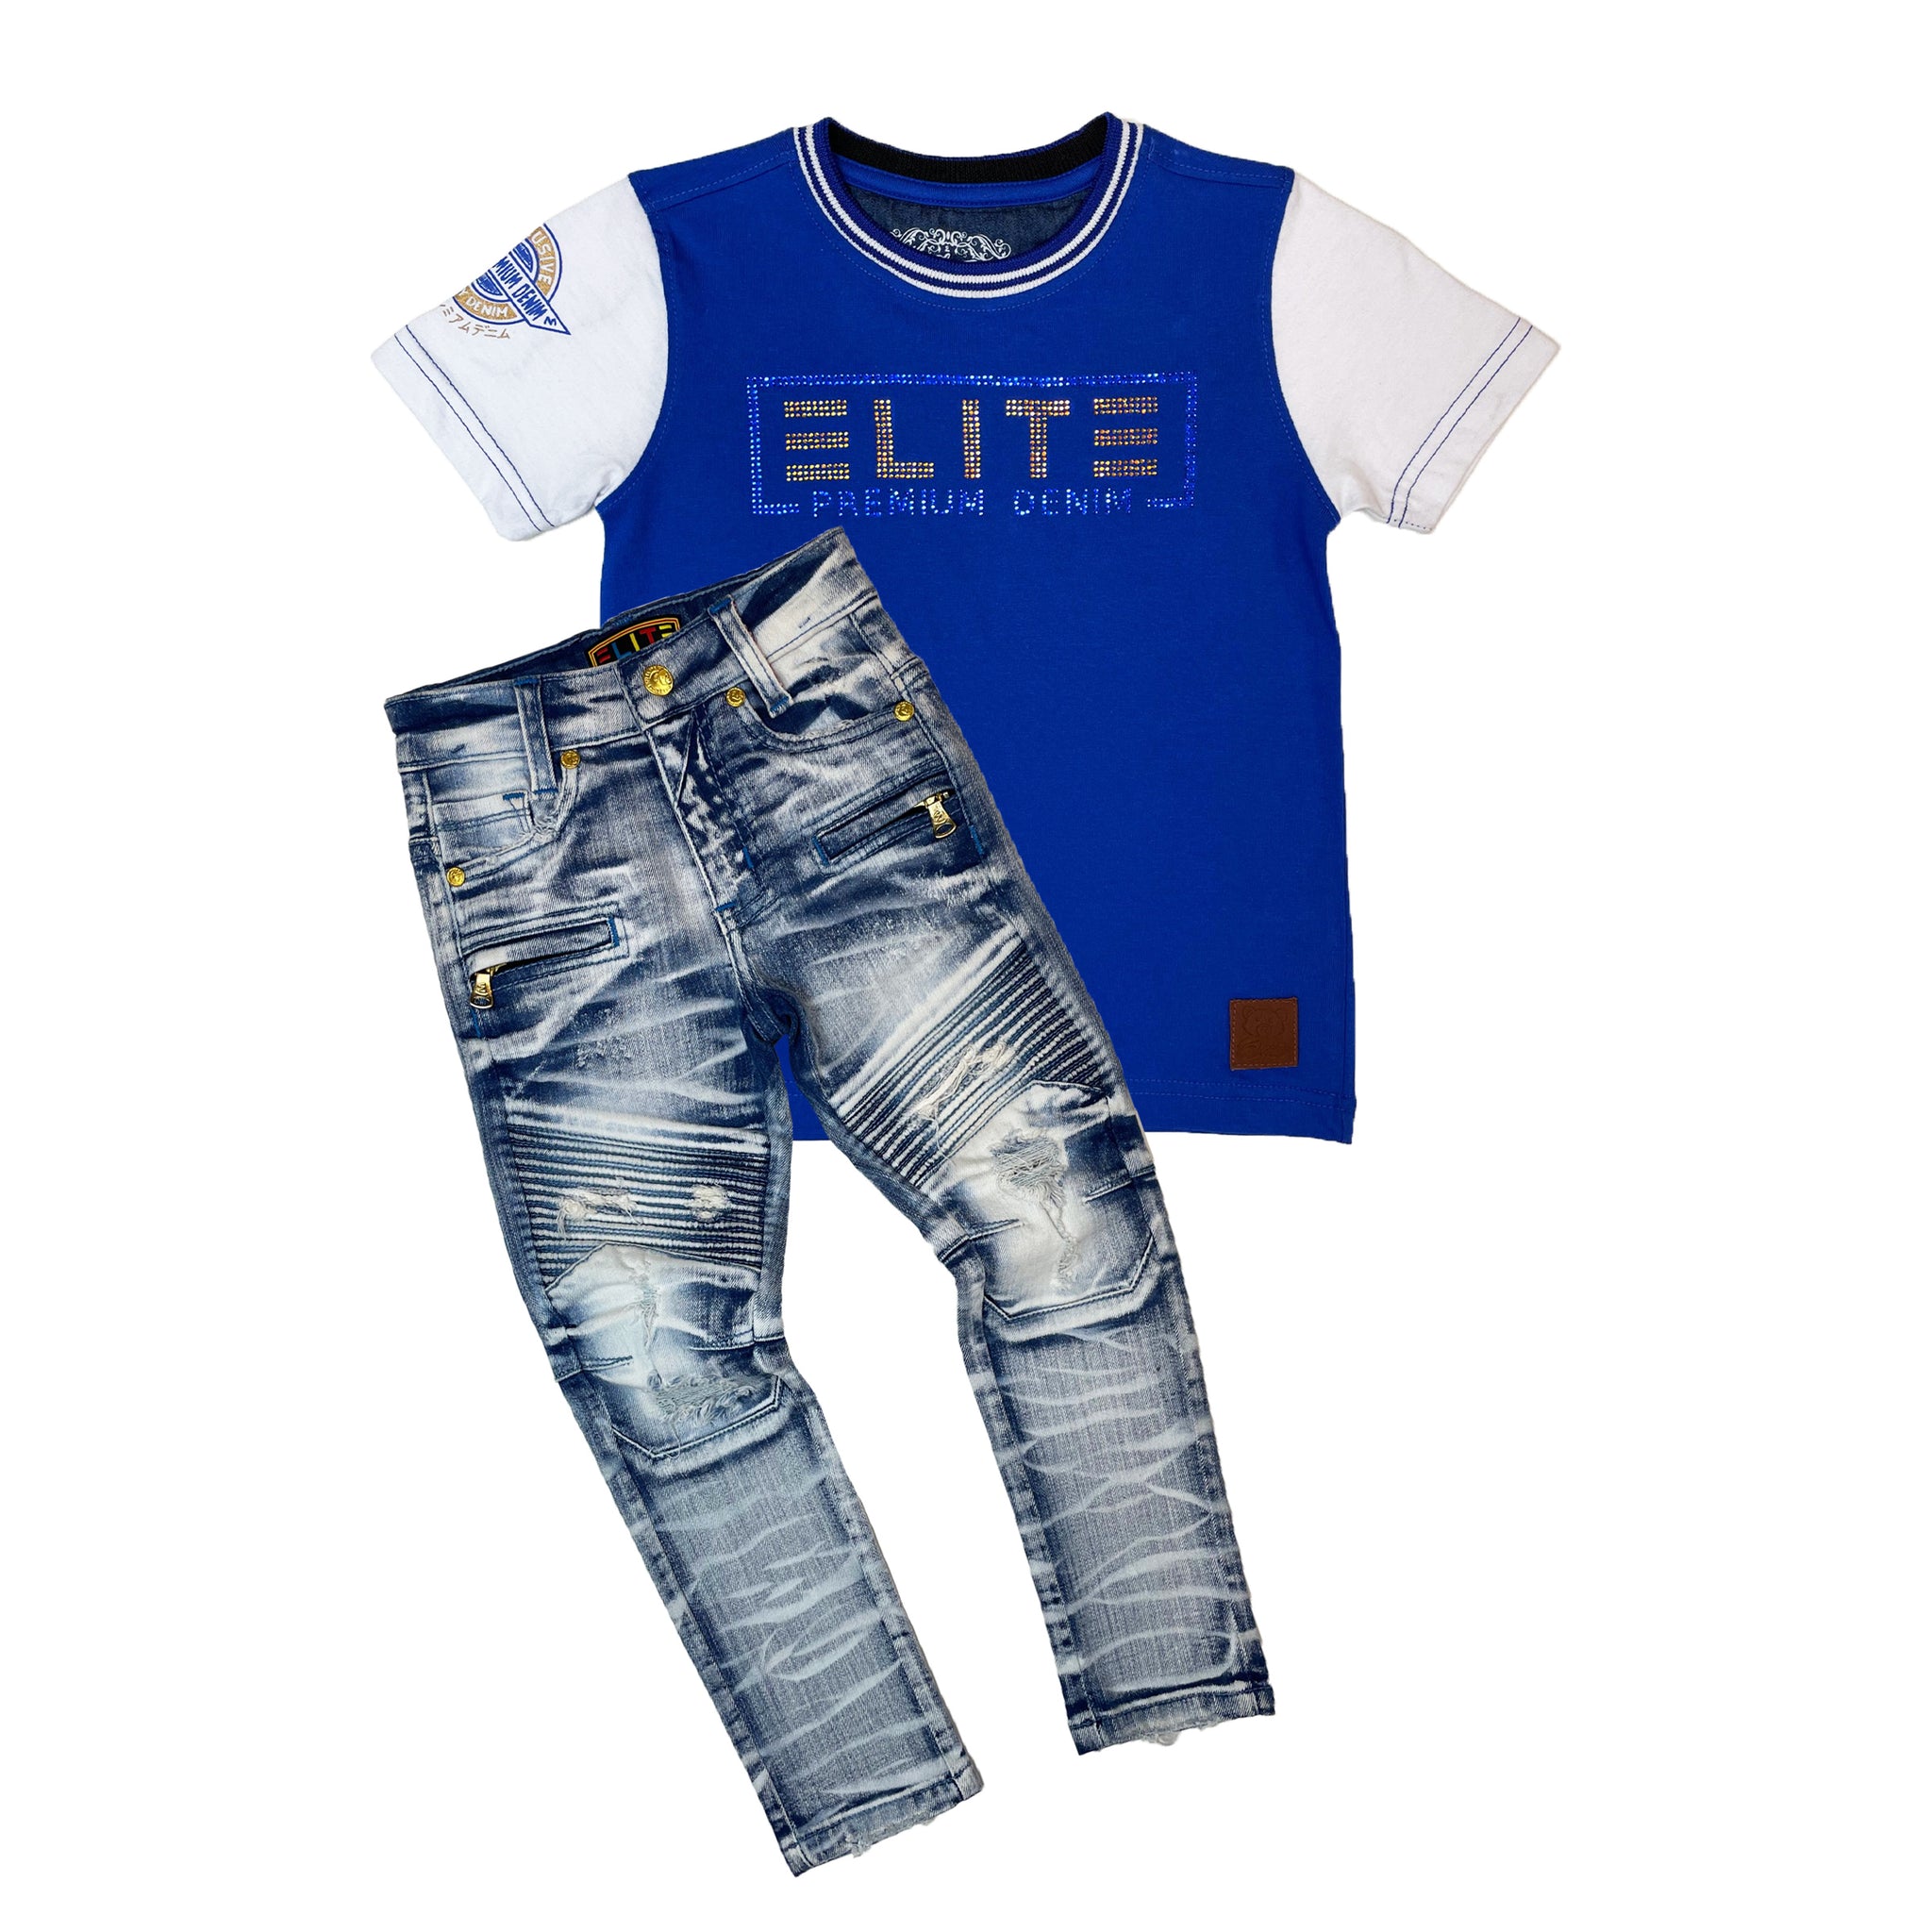 Marina Elite Stone Blue Kids Tee - Elite Premium Denim